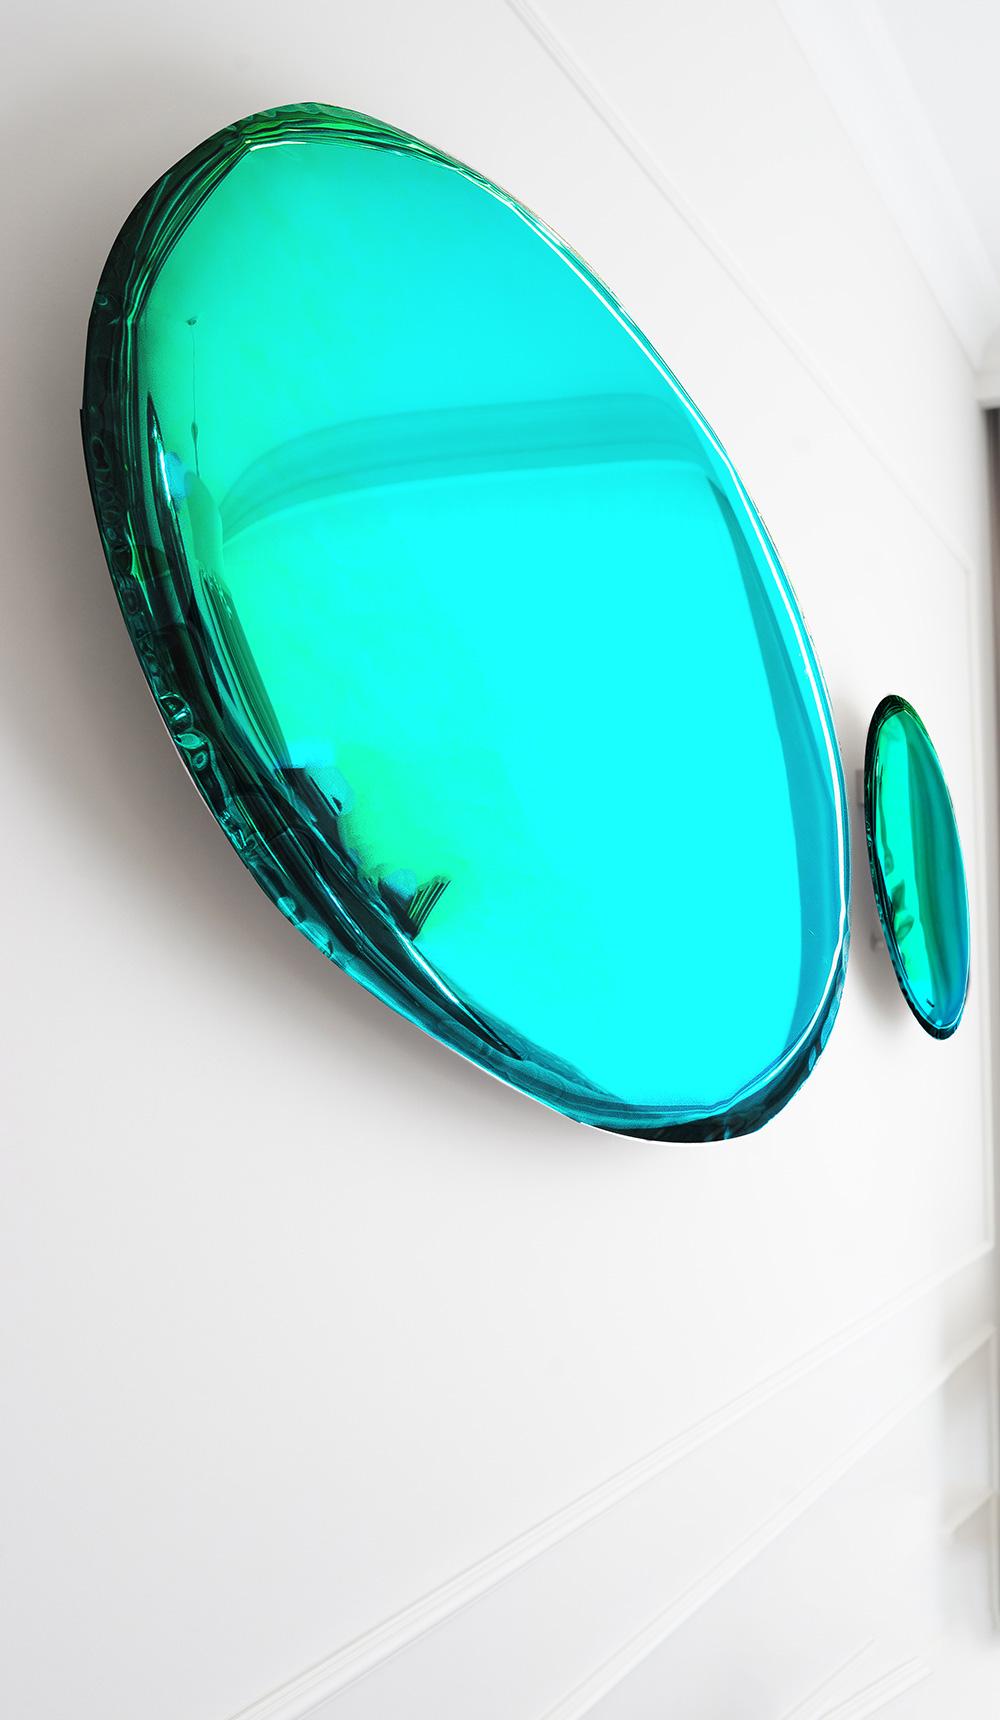 Polish Mirror 'Tafla C2', Stainless Steel by Zieta Prozessdesign, Gradient Collection